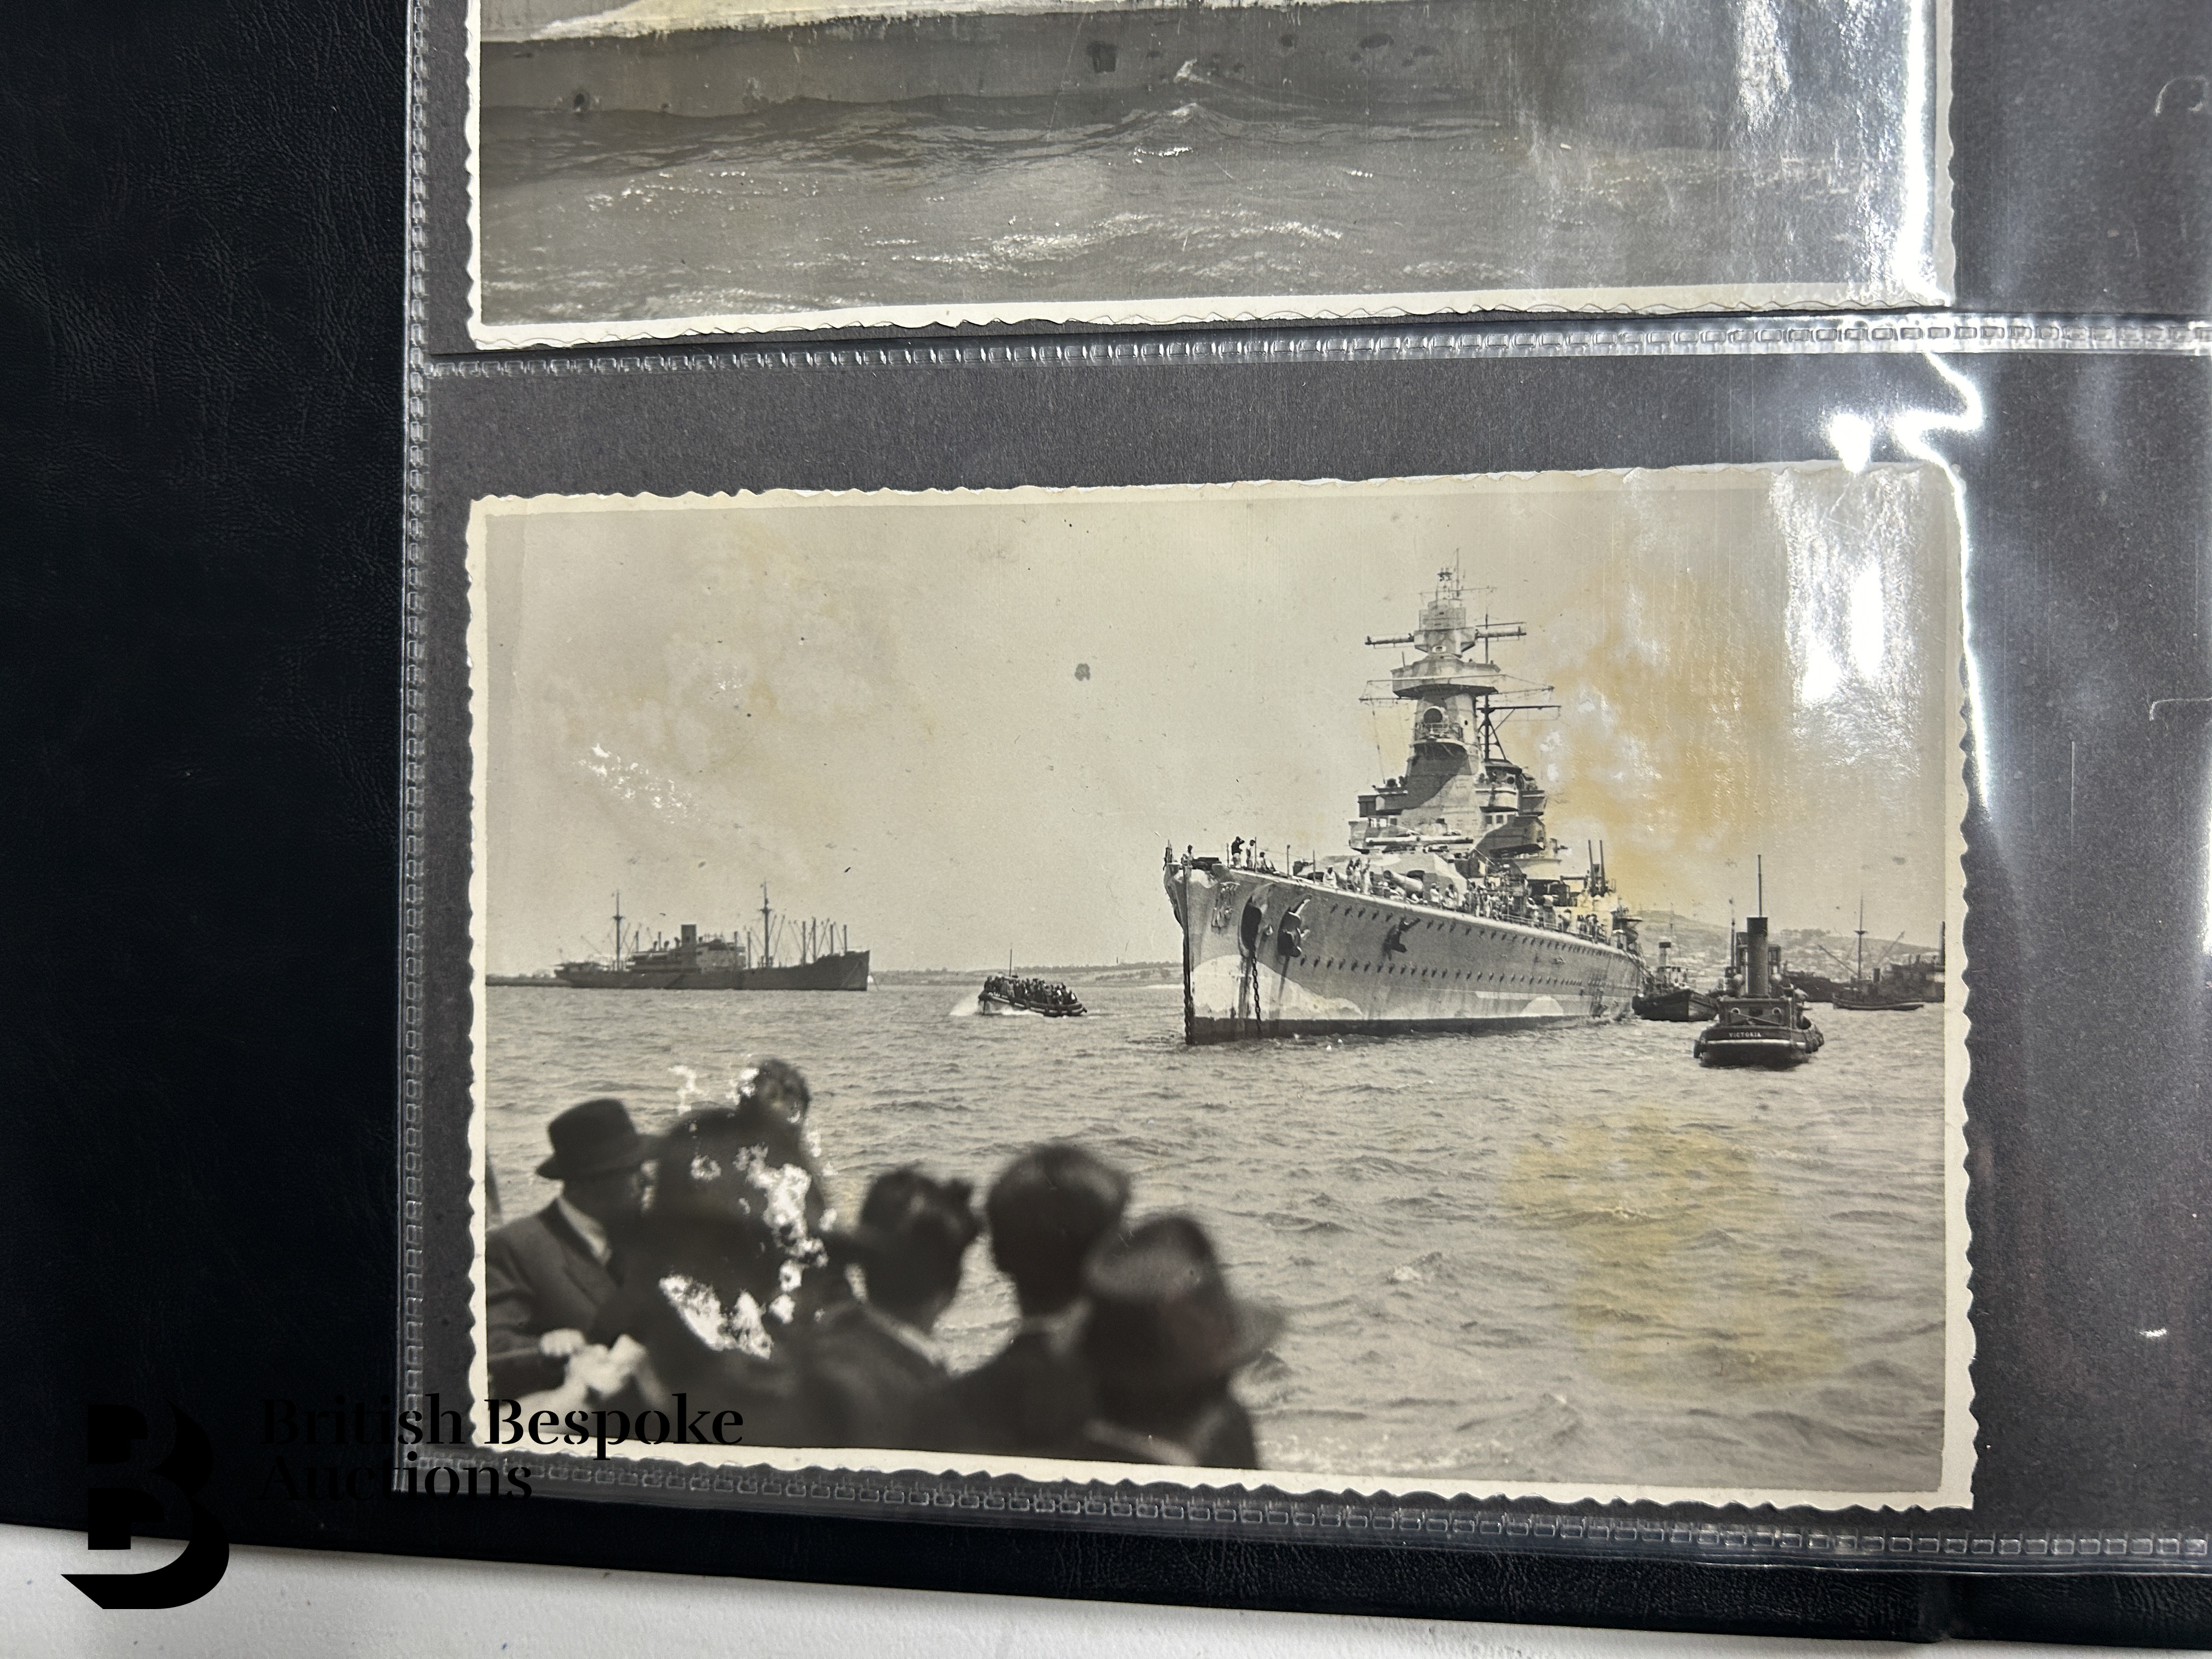 Graf Spee (Pocket Battleship) Interest, incl. Photographs, Documents, Miscellanea - Image 56 of 126